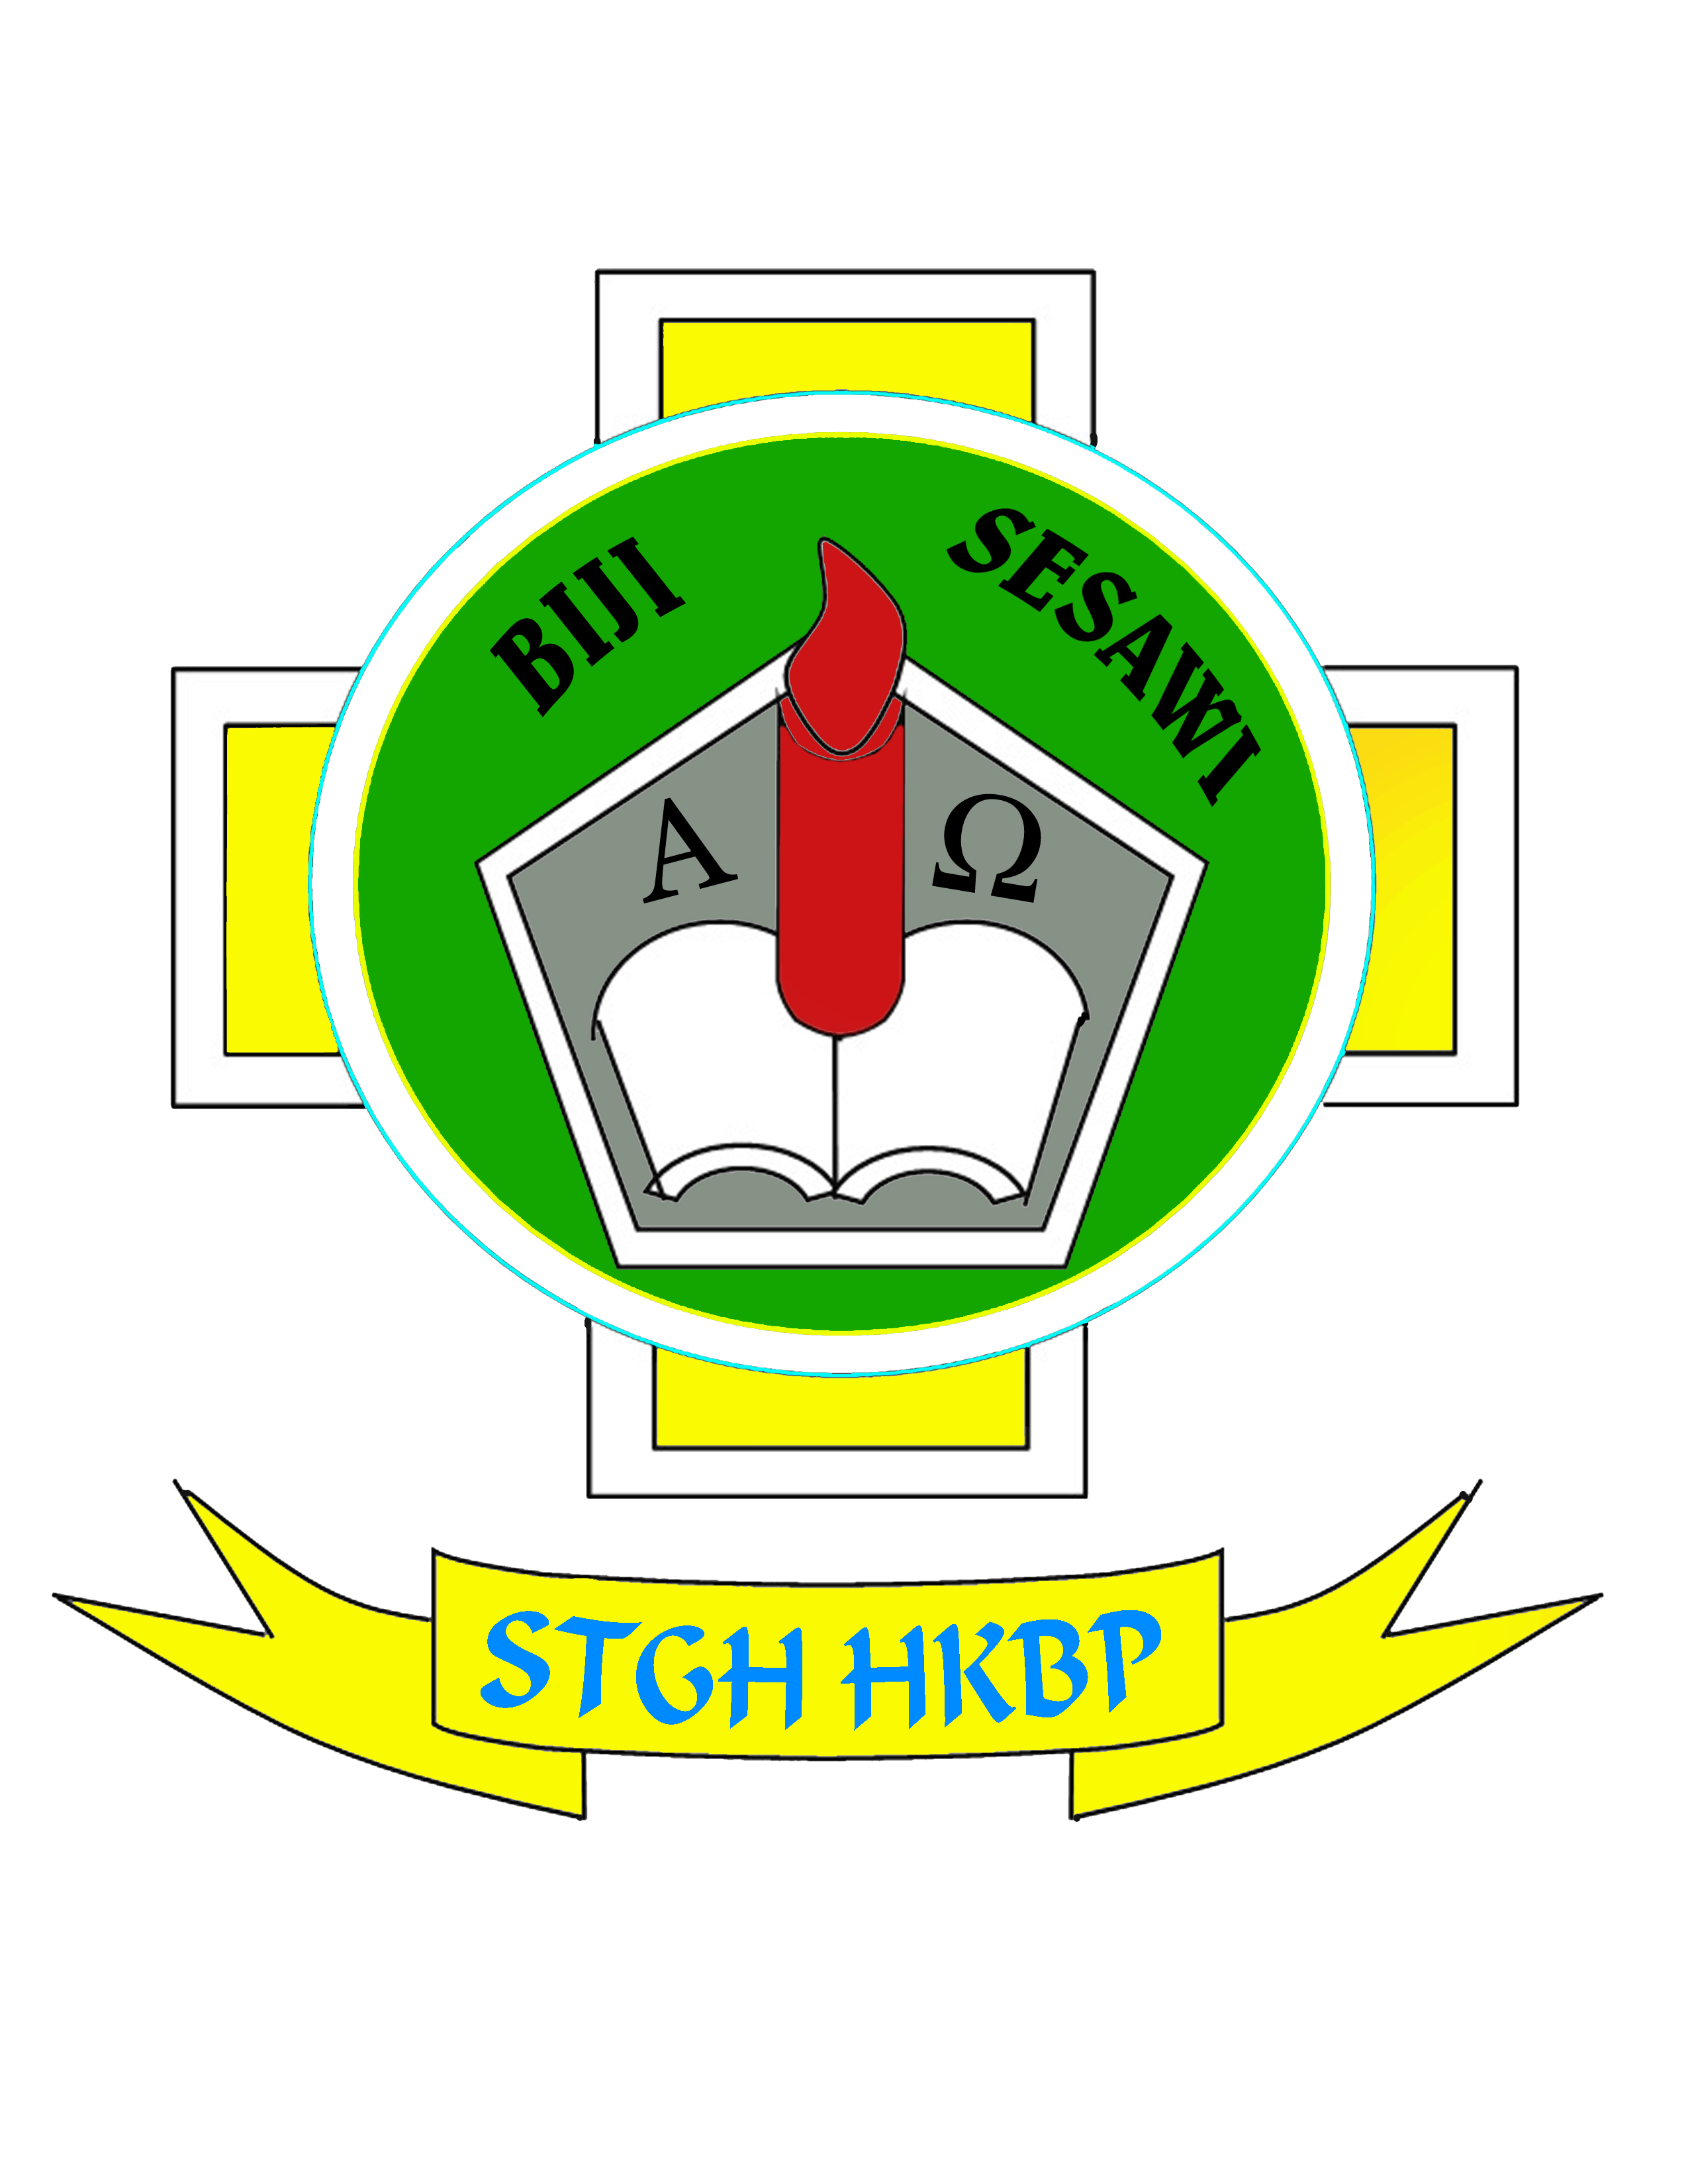 Sekolah Tinggi Guru Huria HKBP Sipoholon